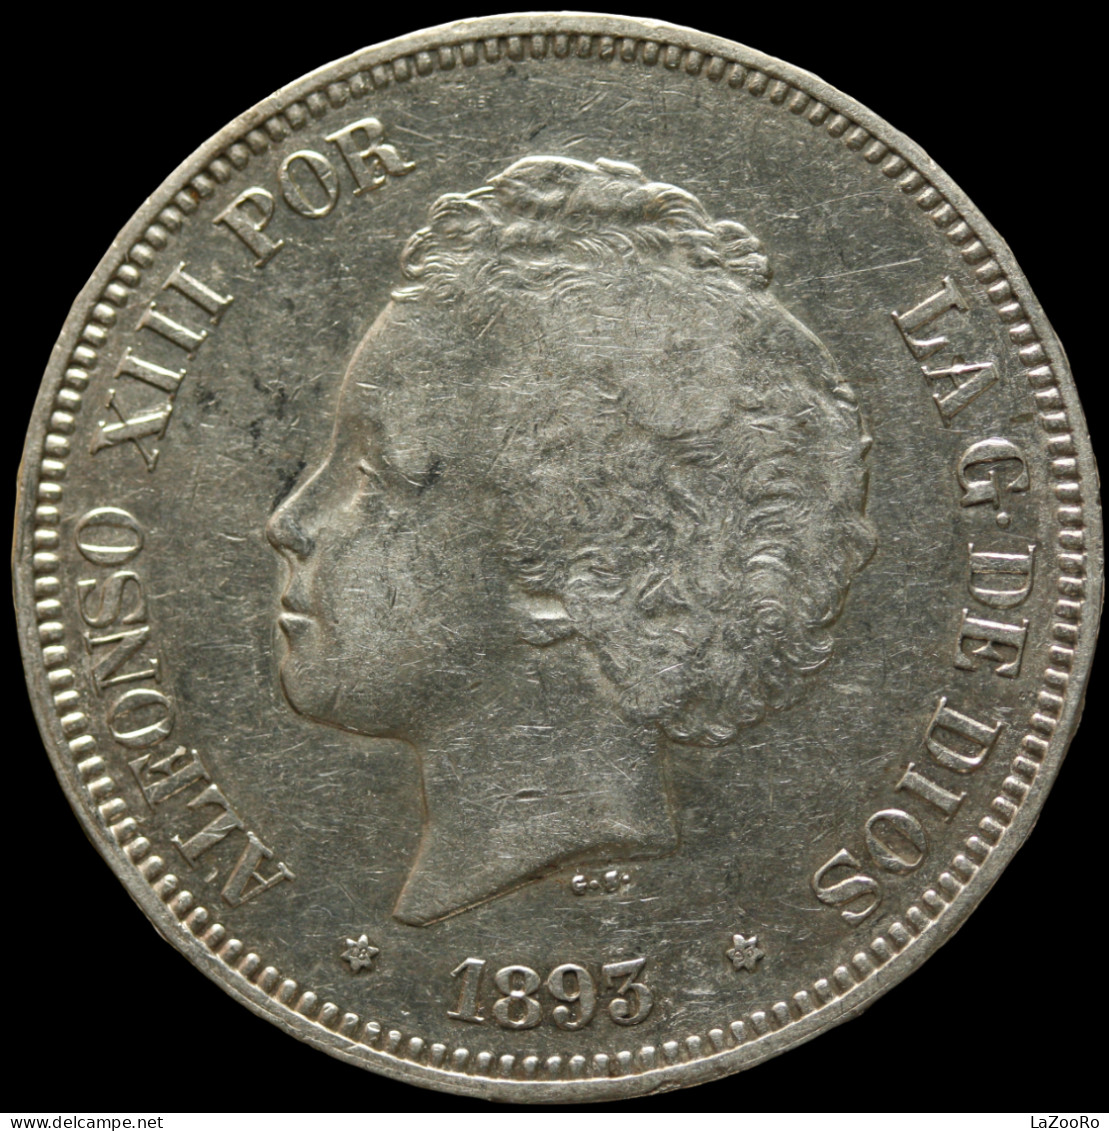 LaZooRo: Spain 5 Pesetas 1893 XF - Silver - First Minting